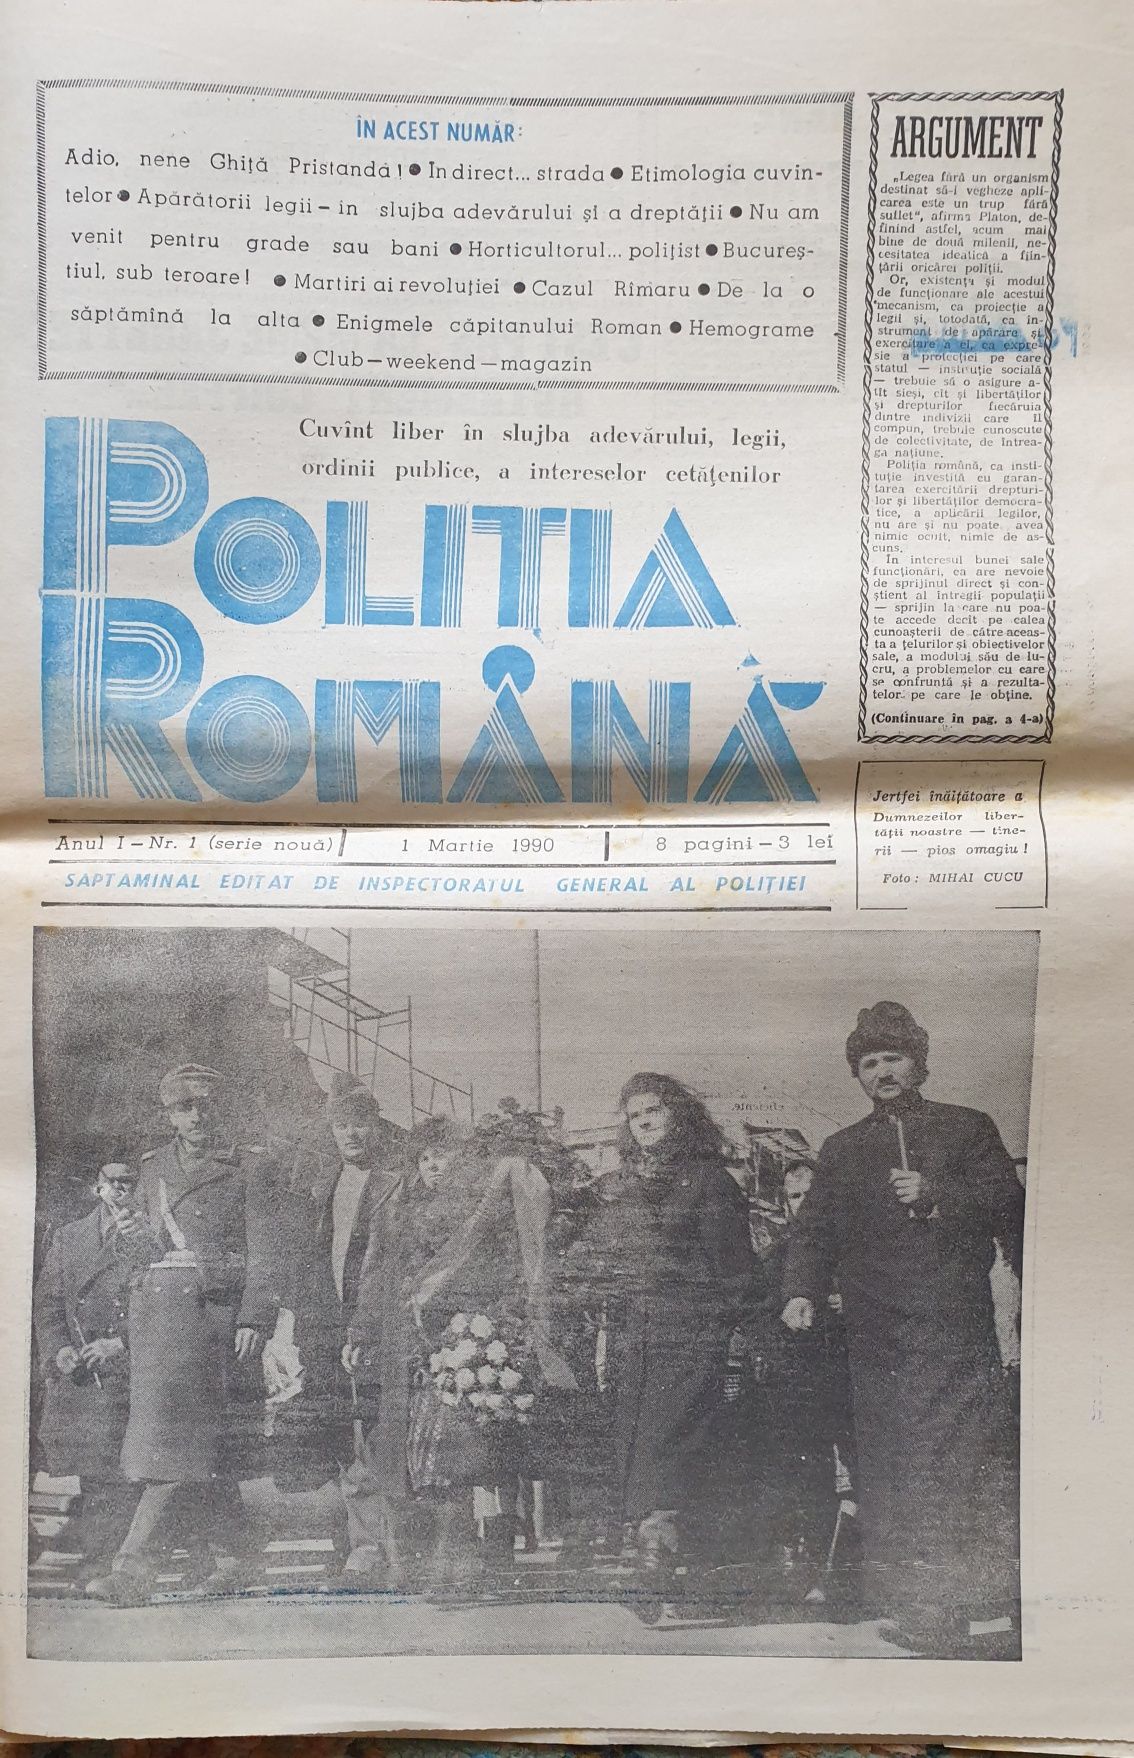 Primele aparitii ziare romanesti 1989